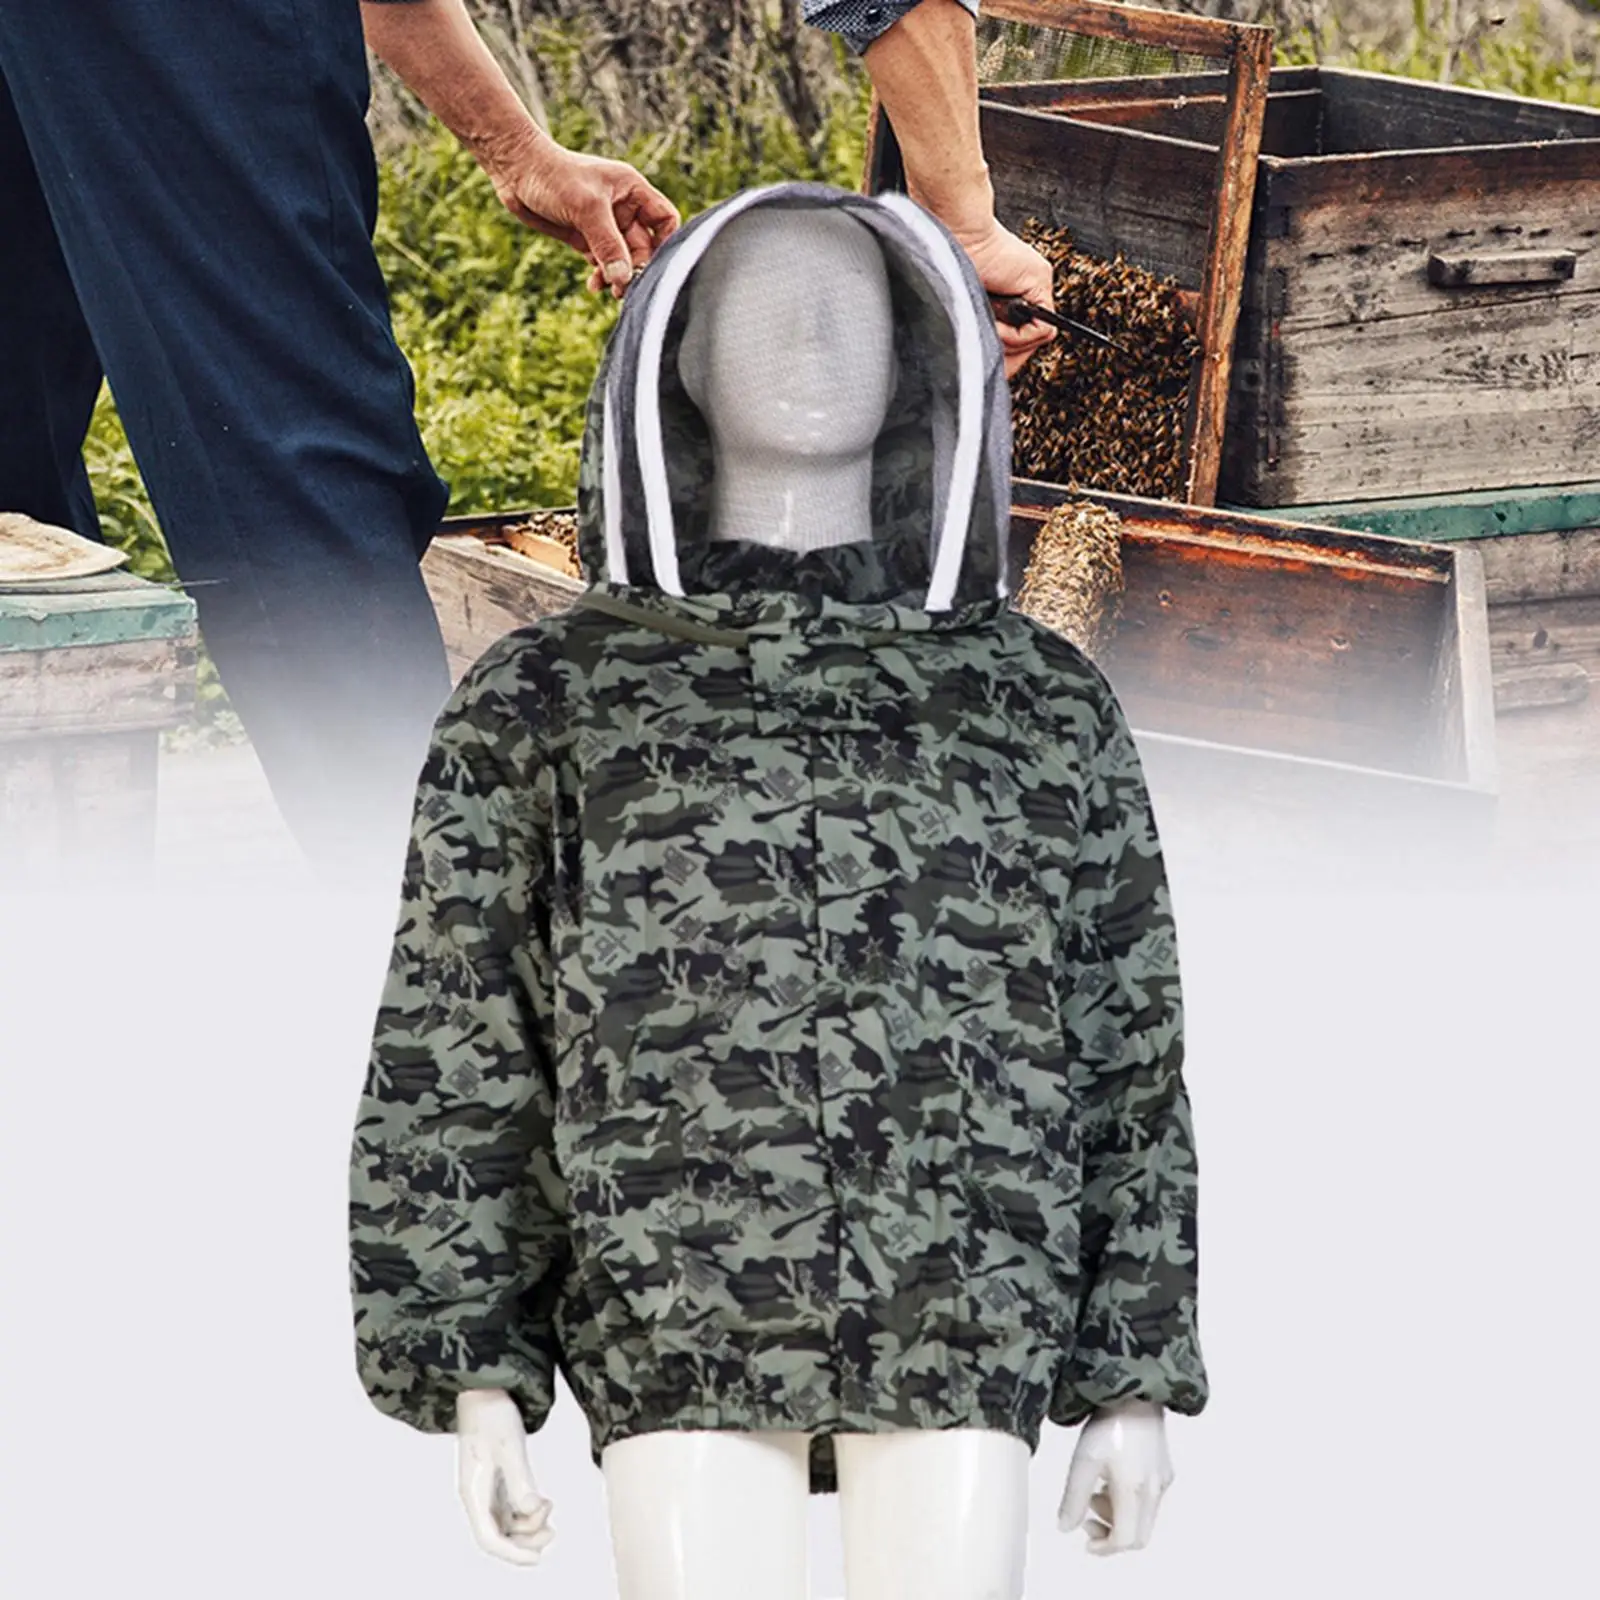 Beekeeper Jacket Premium with Pockets Hat Equip with Fencing Veils Hood Beekeeping Jacket Beekeeping Protective Jacket Suit